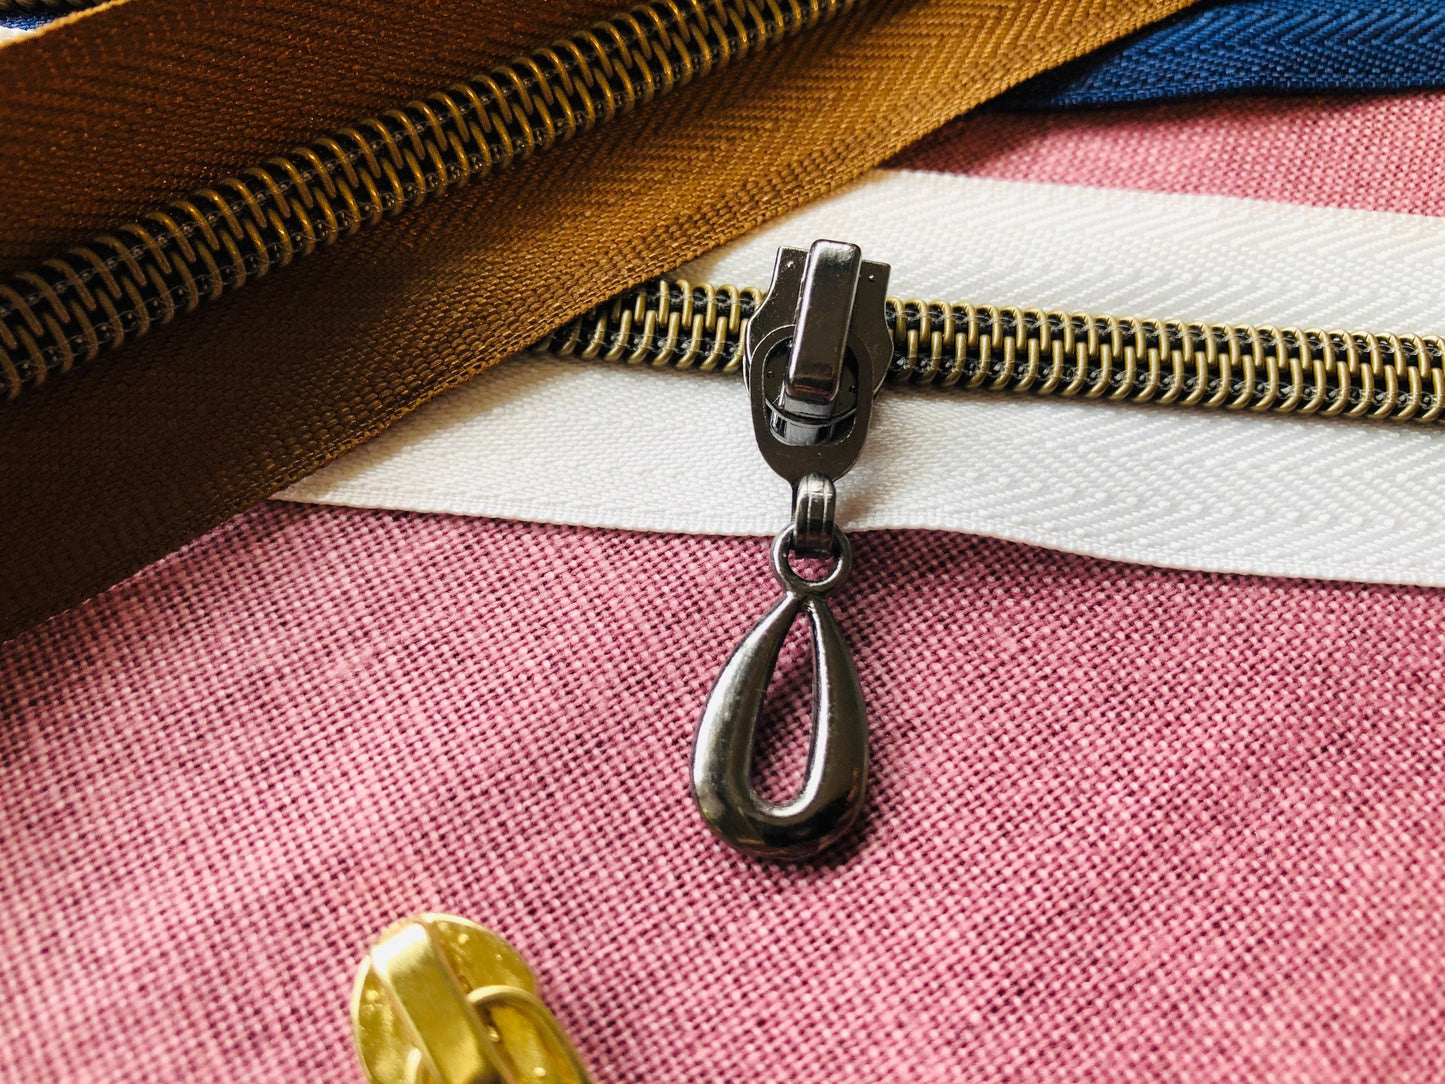 Size 5 zipper pulls for nylon zipper tapes, zipper pulls in antique brass, sliver, gold, rose gold, gun metal